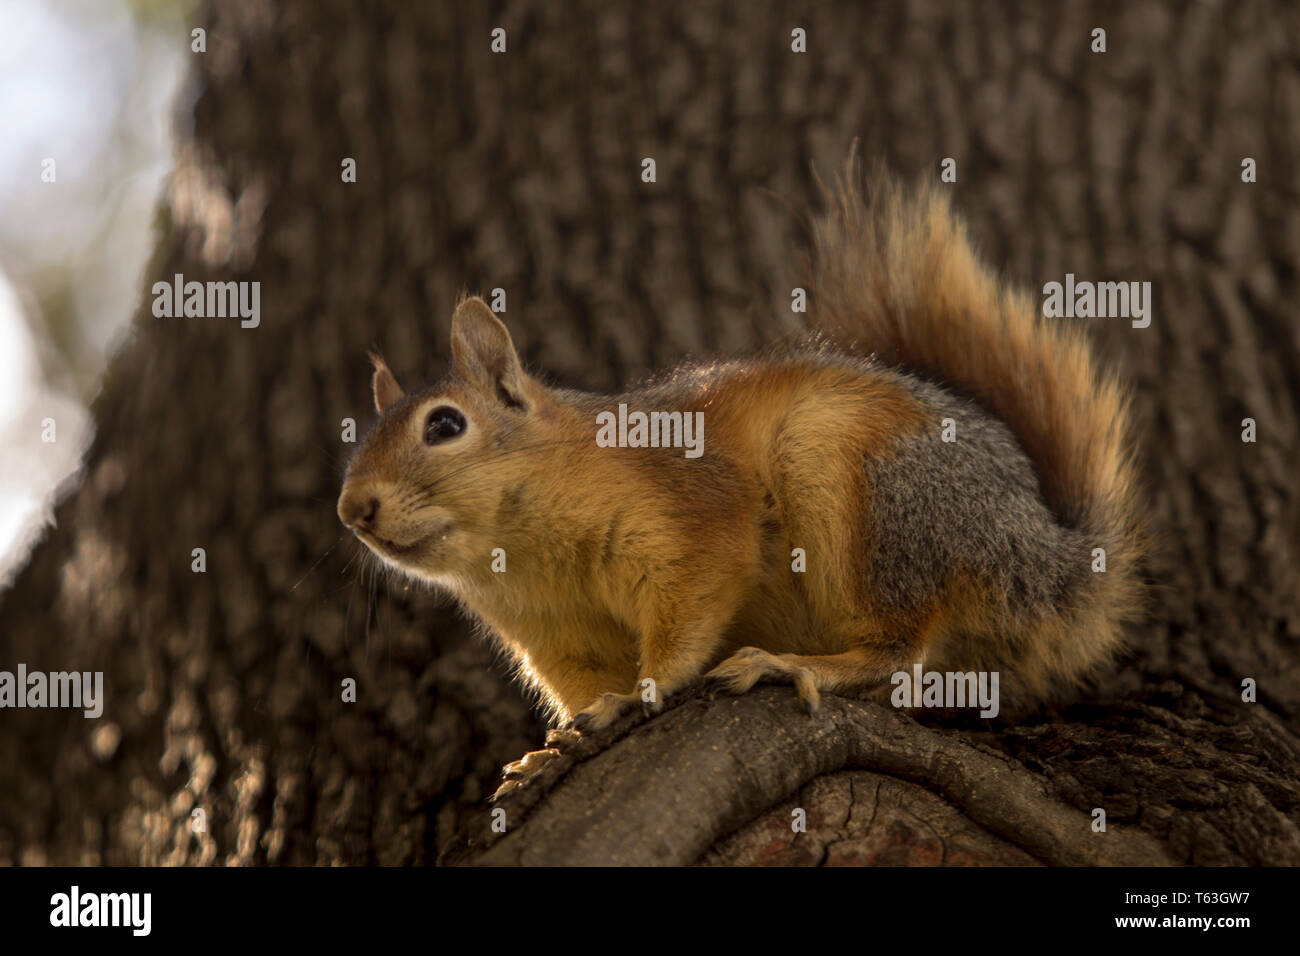 Close up full body profile of a Sciurus Anomalus, Caucasian squirrel on a tree trunk. Stock Photo